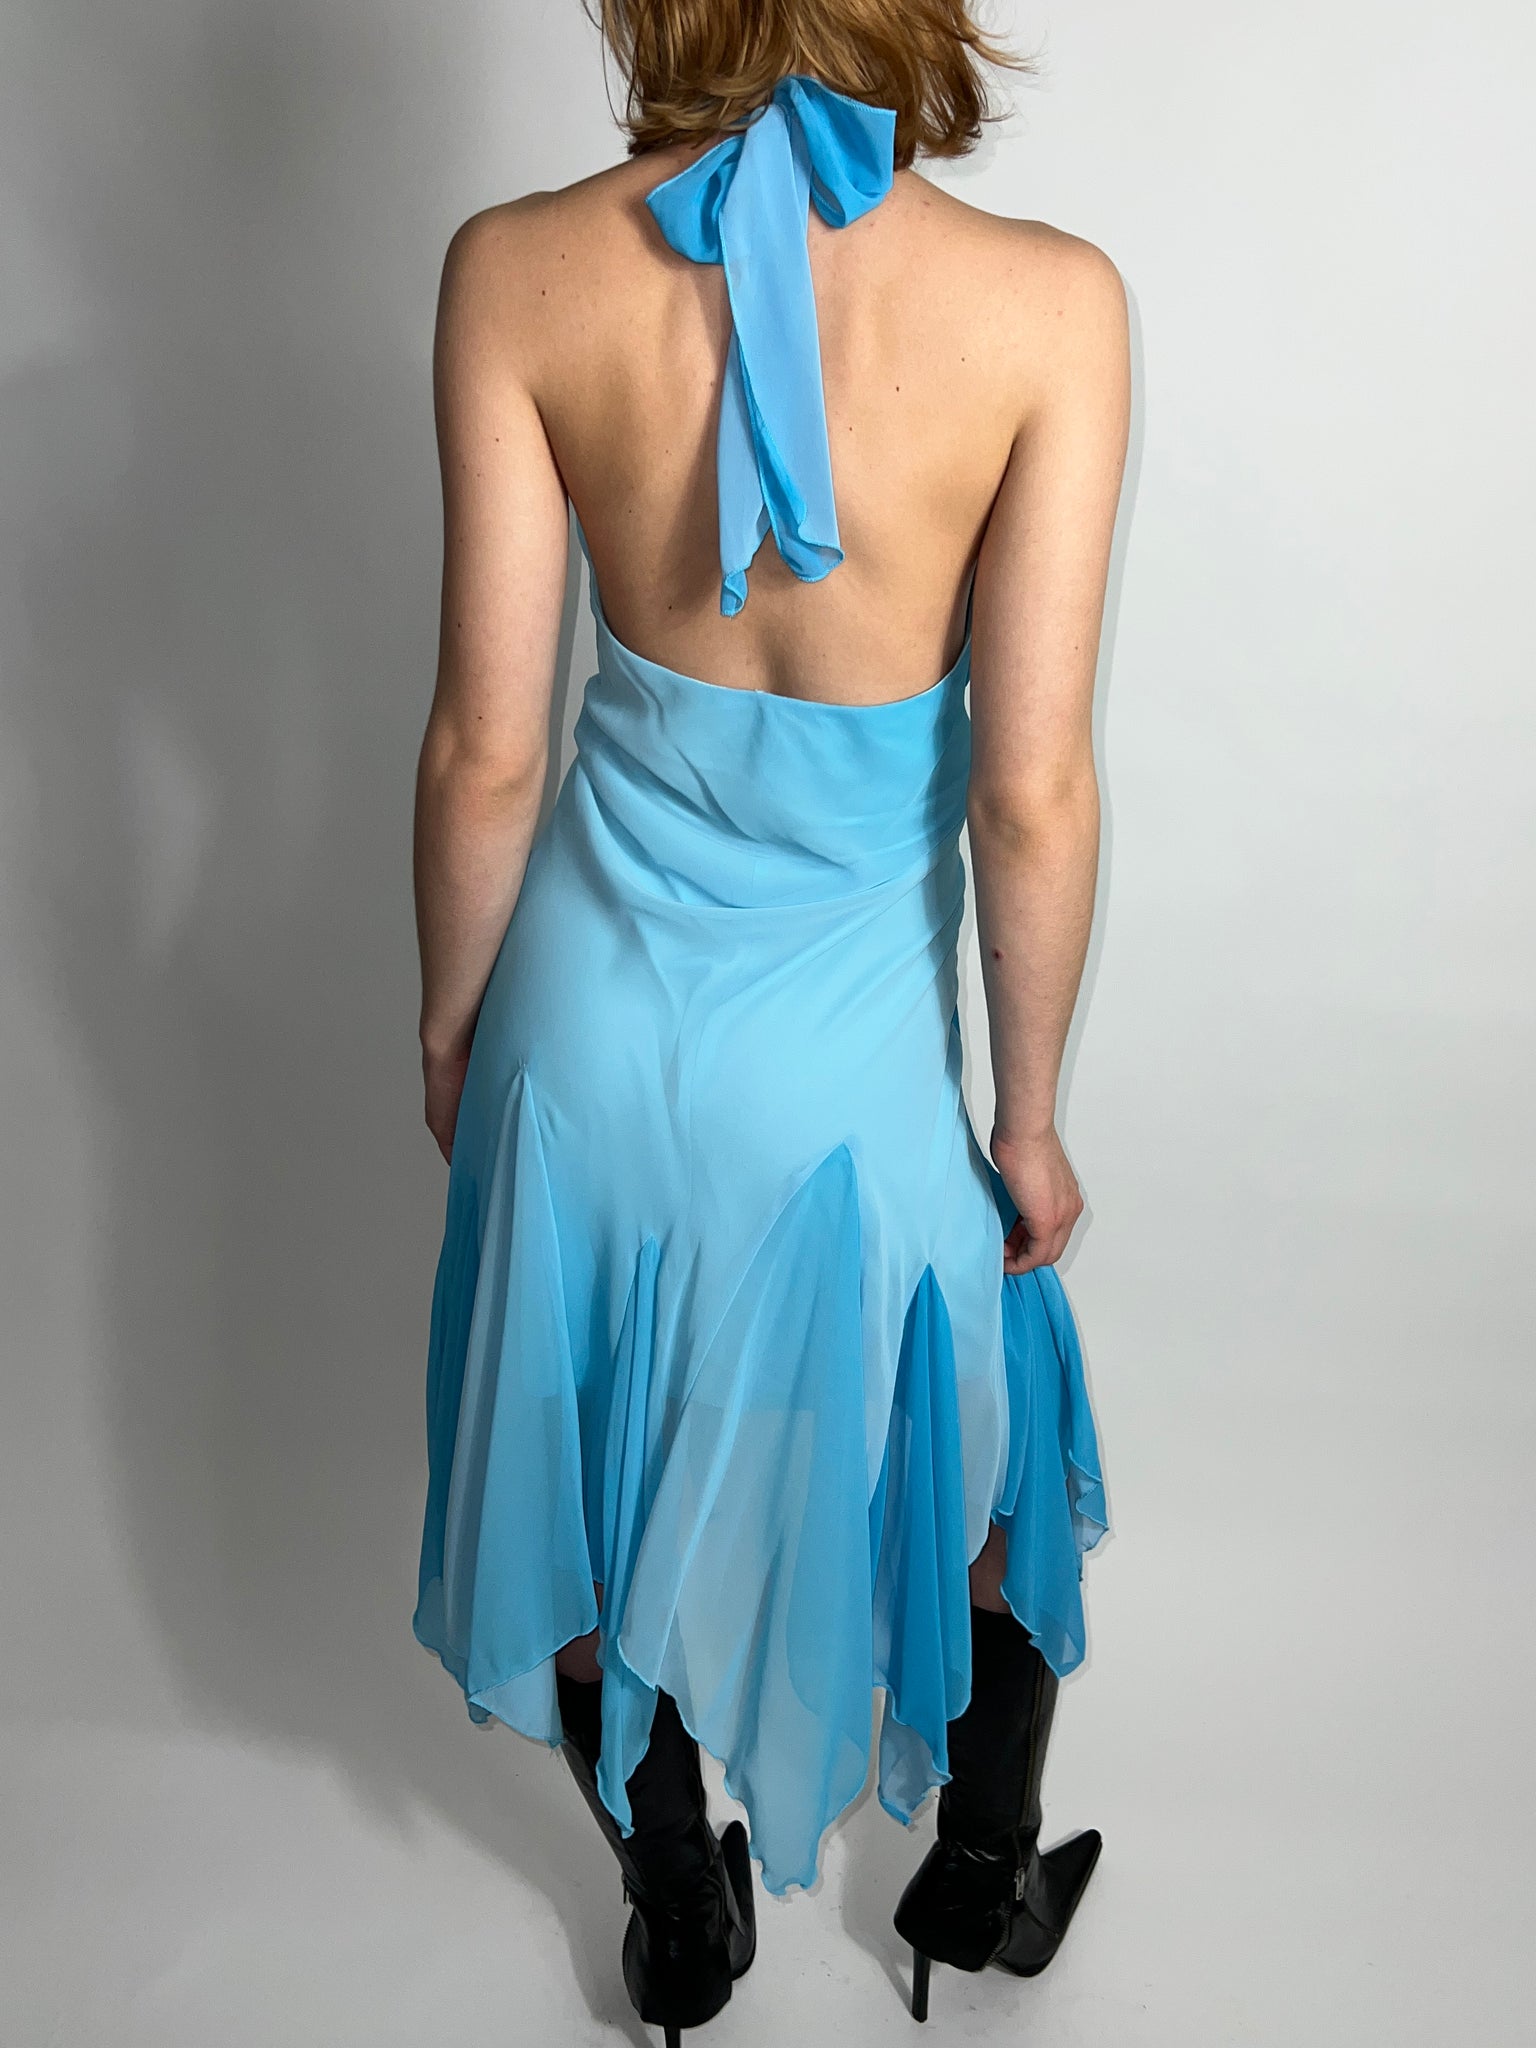 Blue Ombré Halter Dress